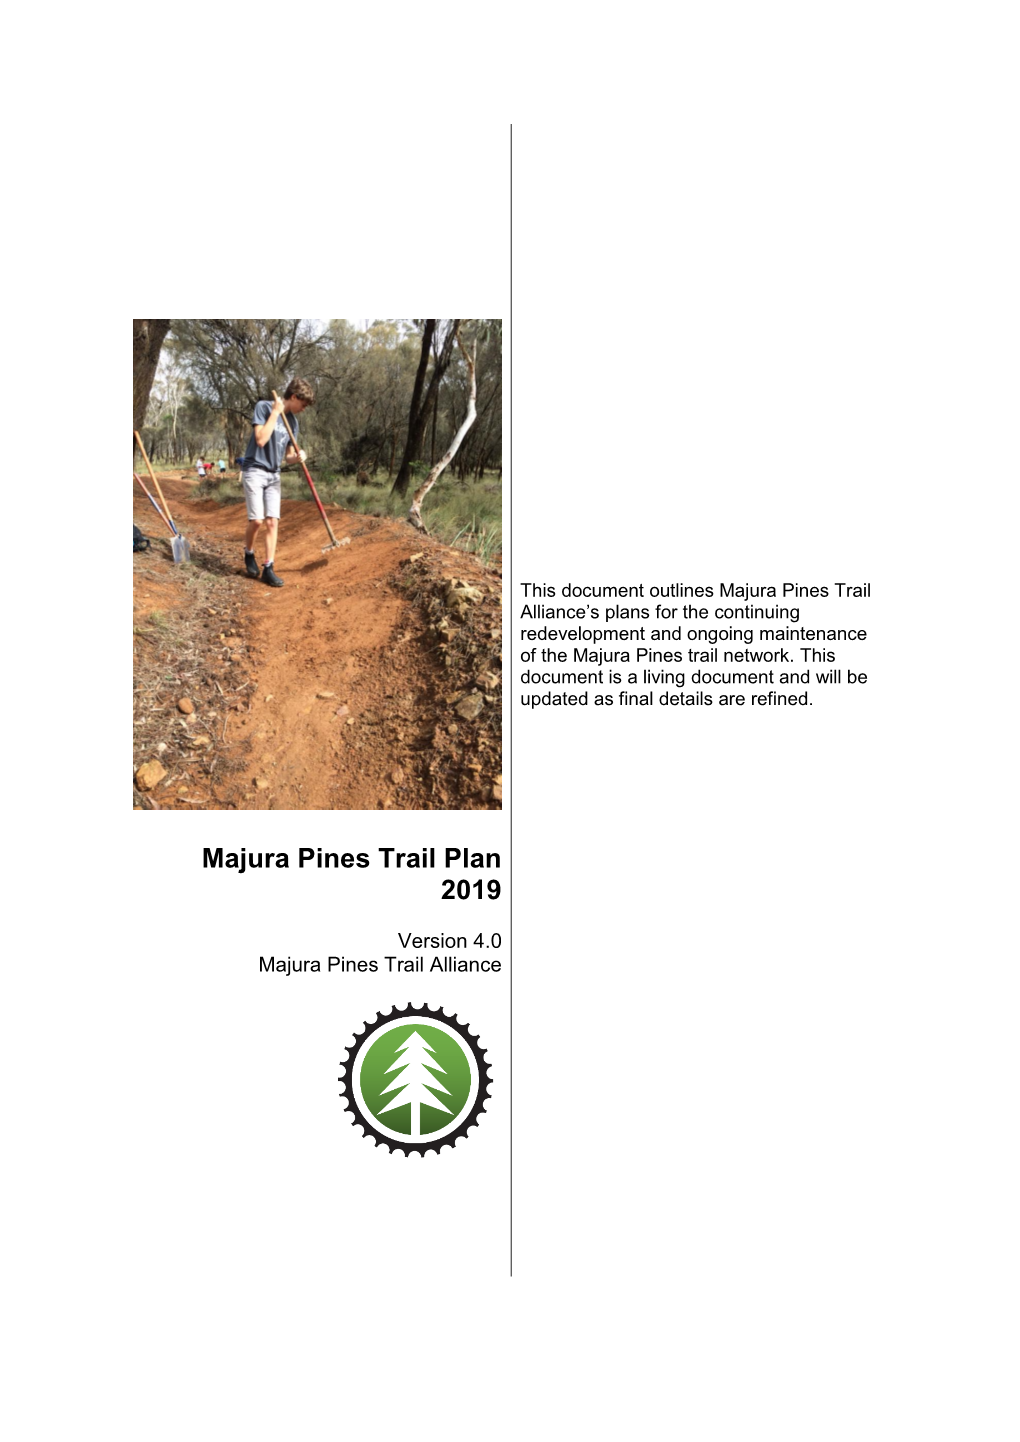 Majura Pines Trail Plan 2019